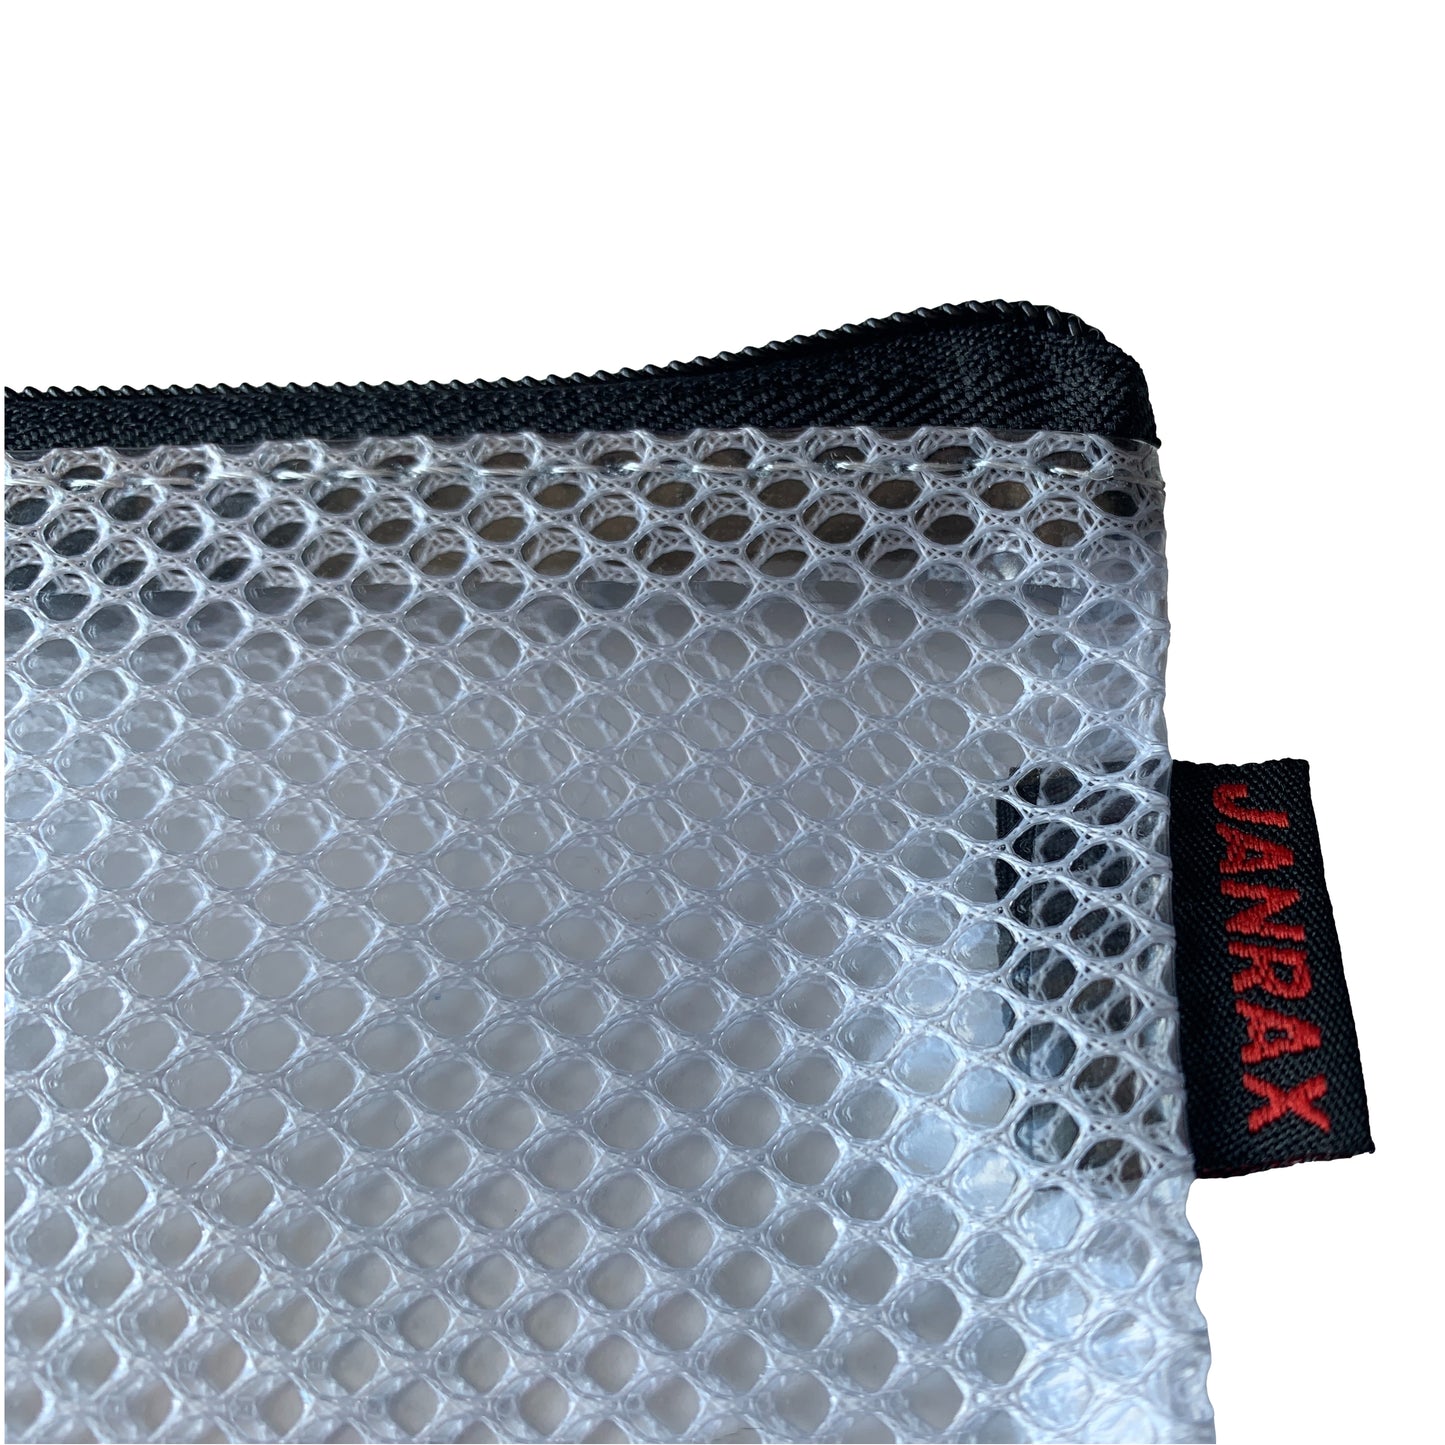 Pack of 12 Premium A4 Black Zip Mesh Bags by Janrax